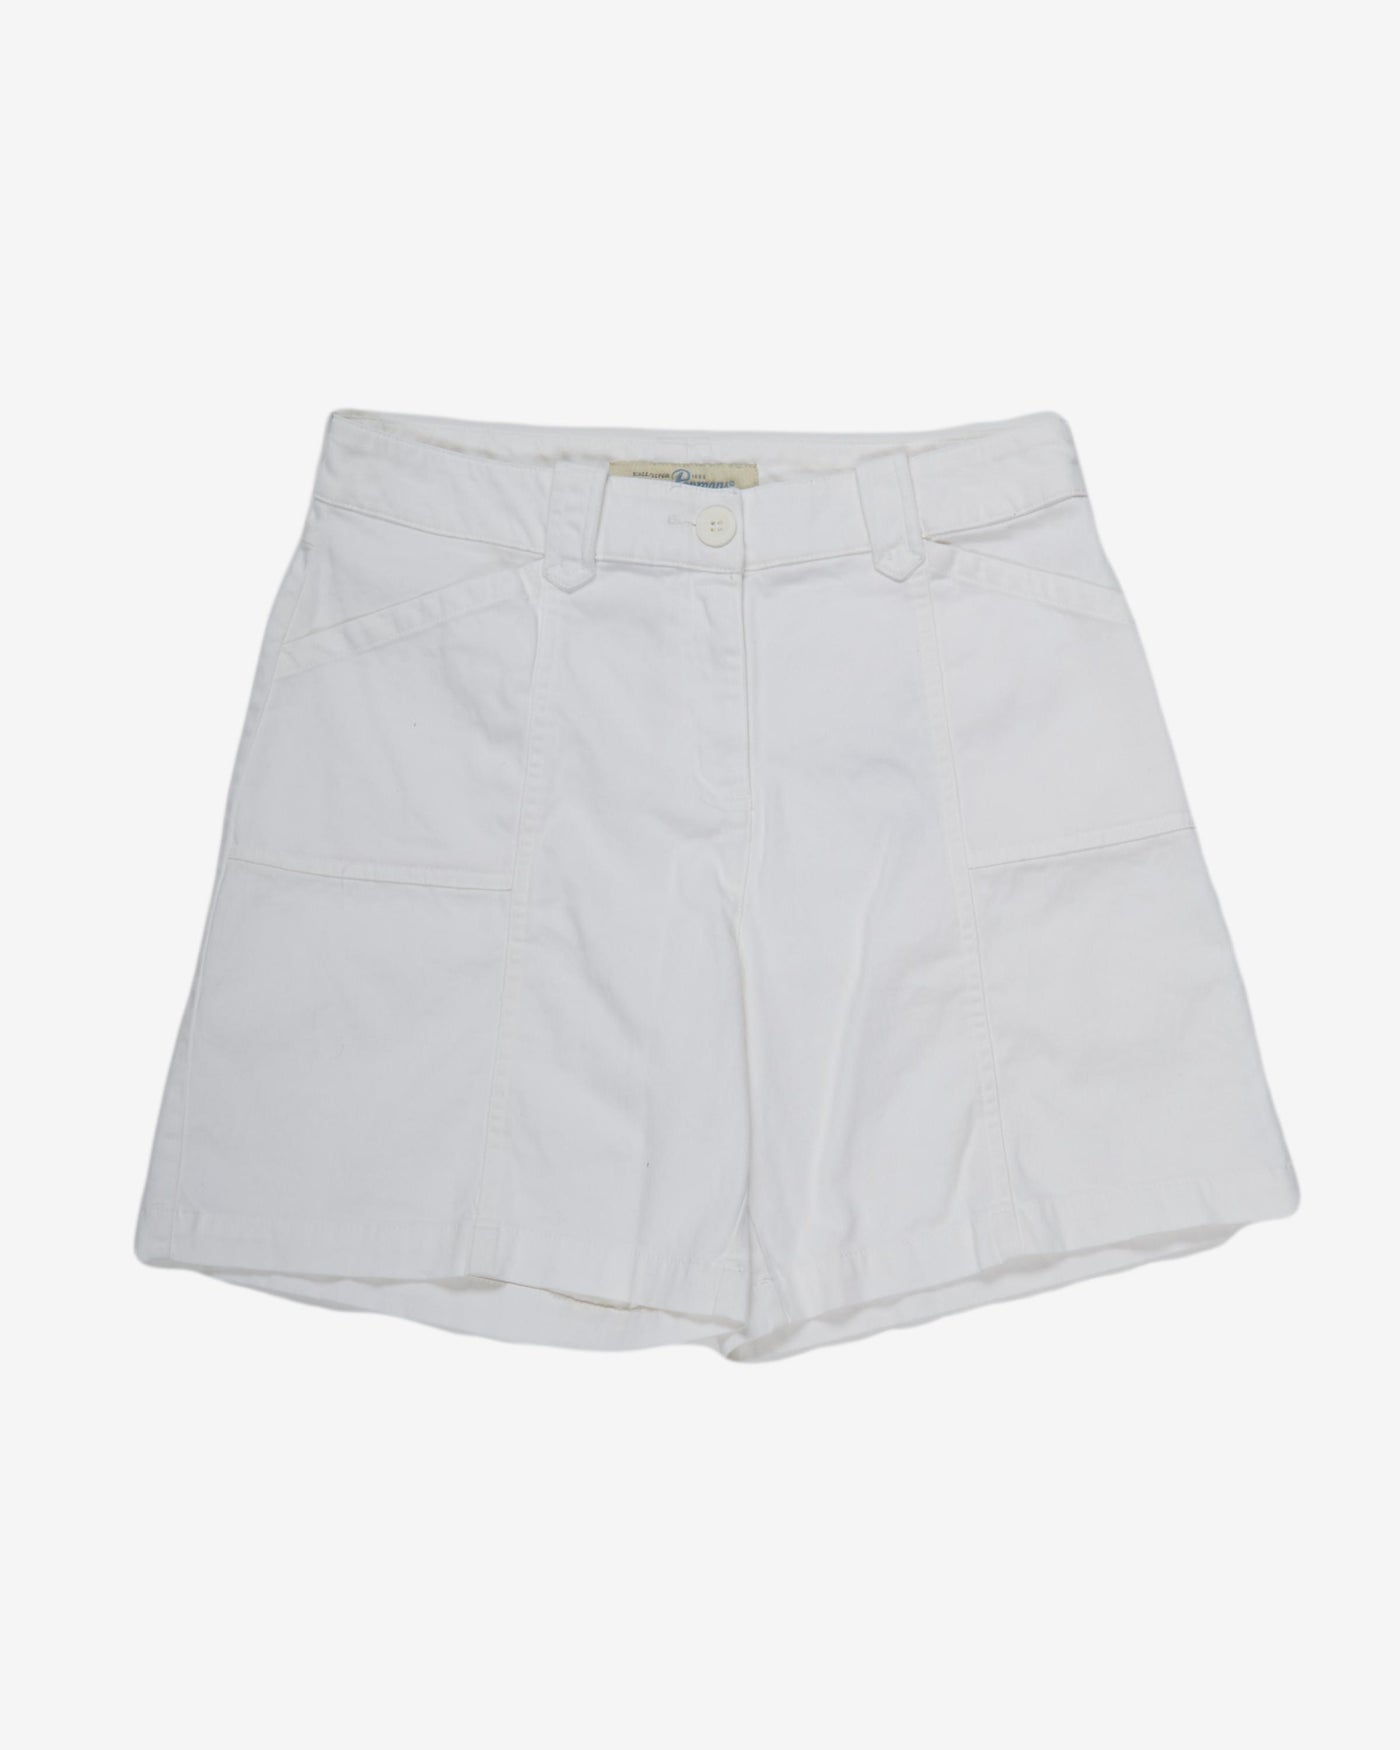 penmans white high waist shorts - w29